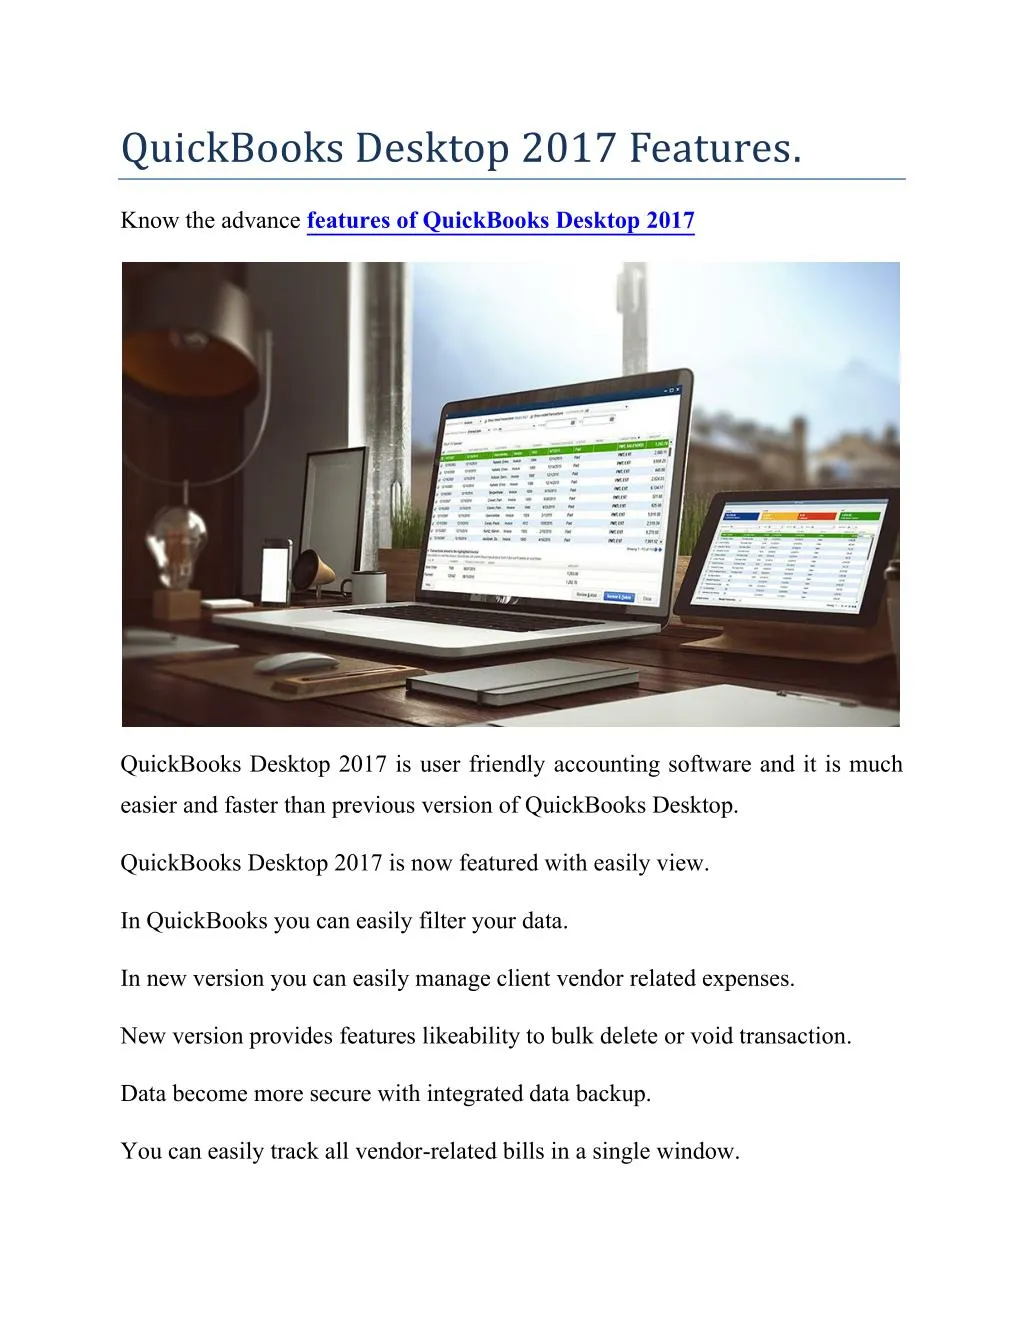 quickbooks desktop 2017 features